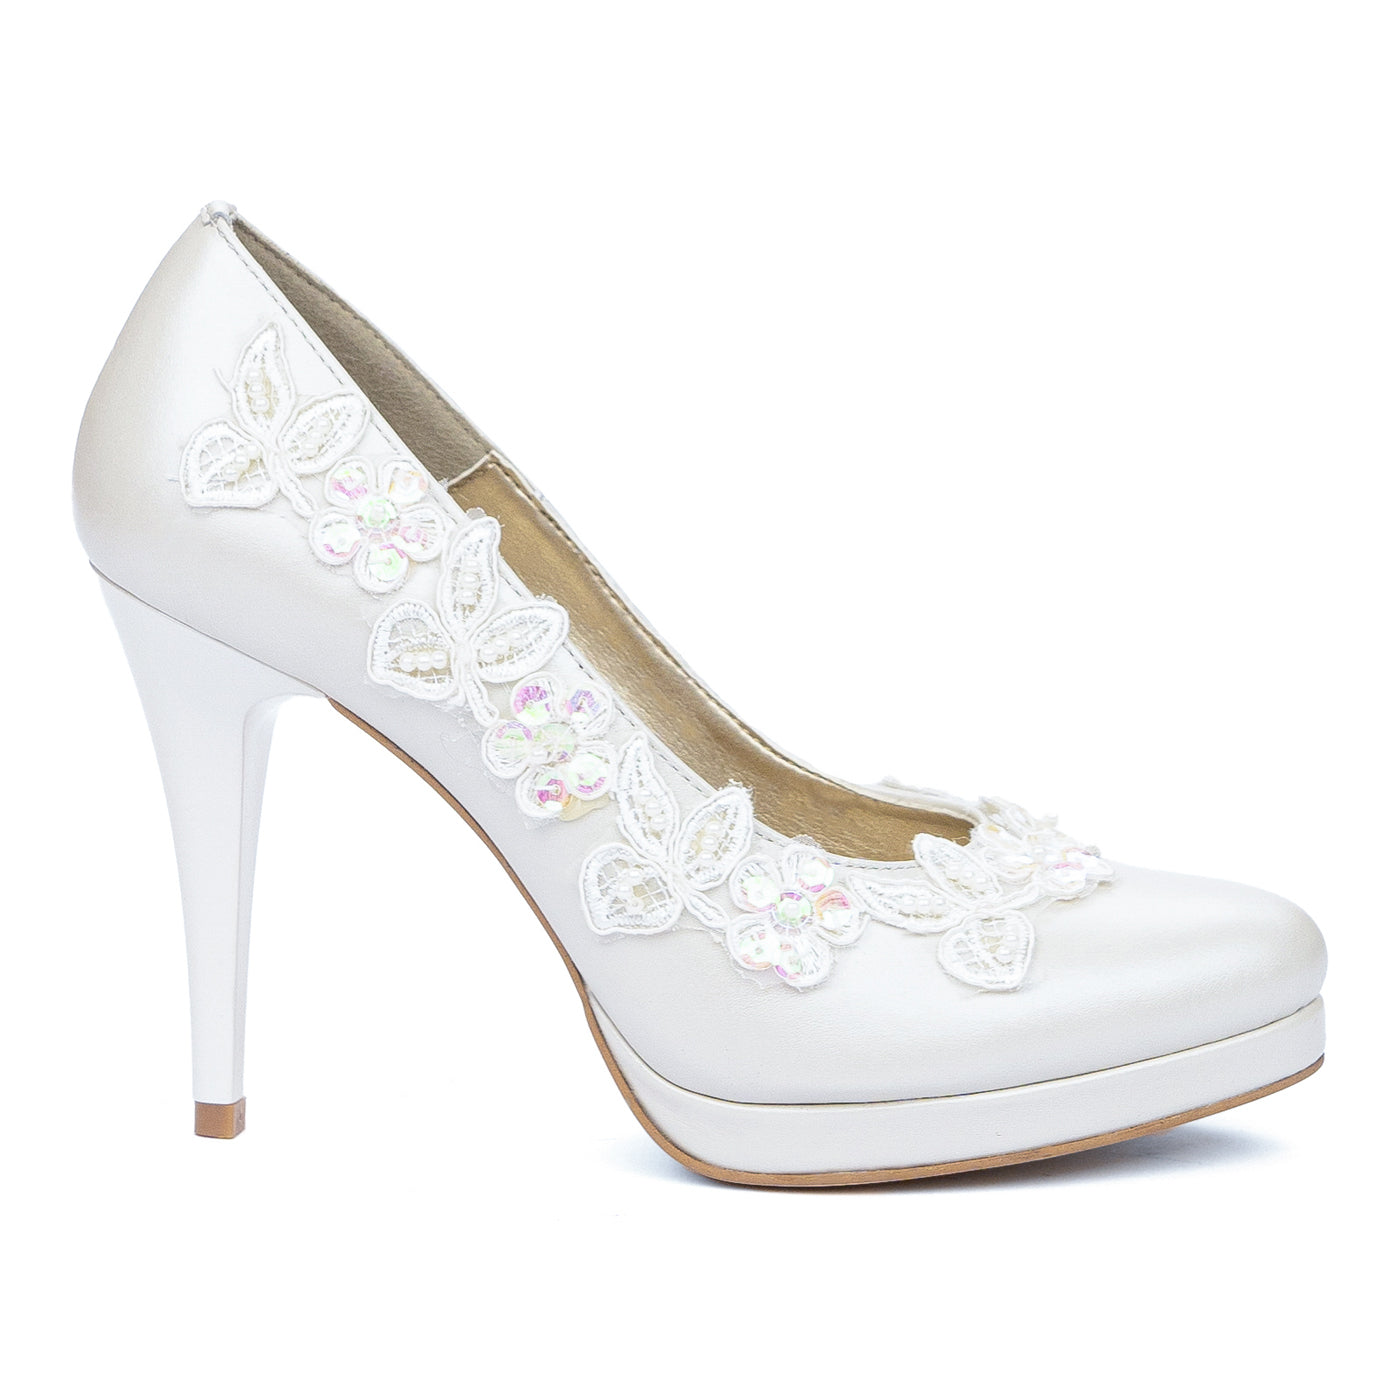 Pantofi dama eleganti din piele naturala alba 9466